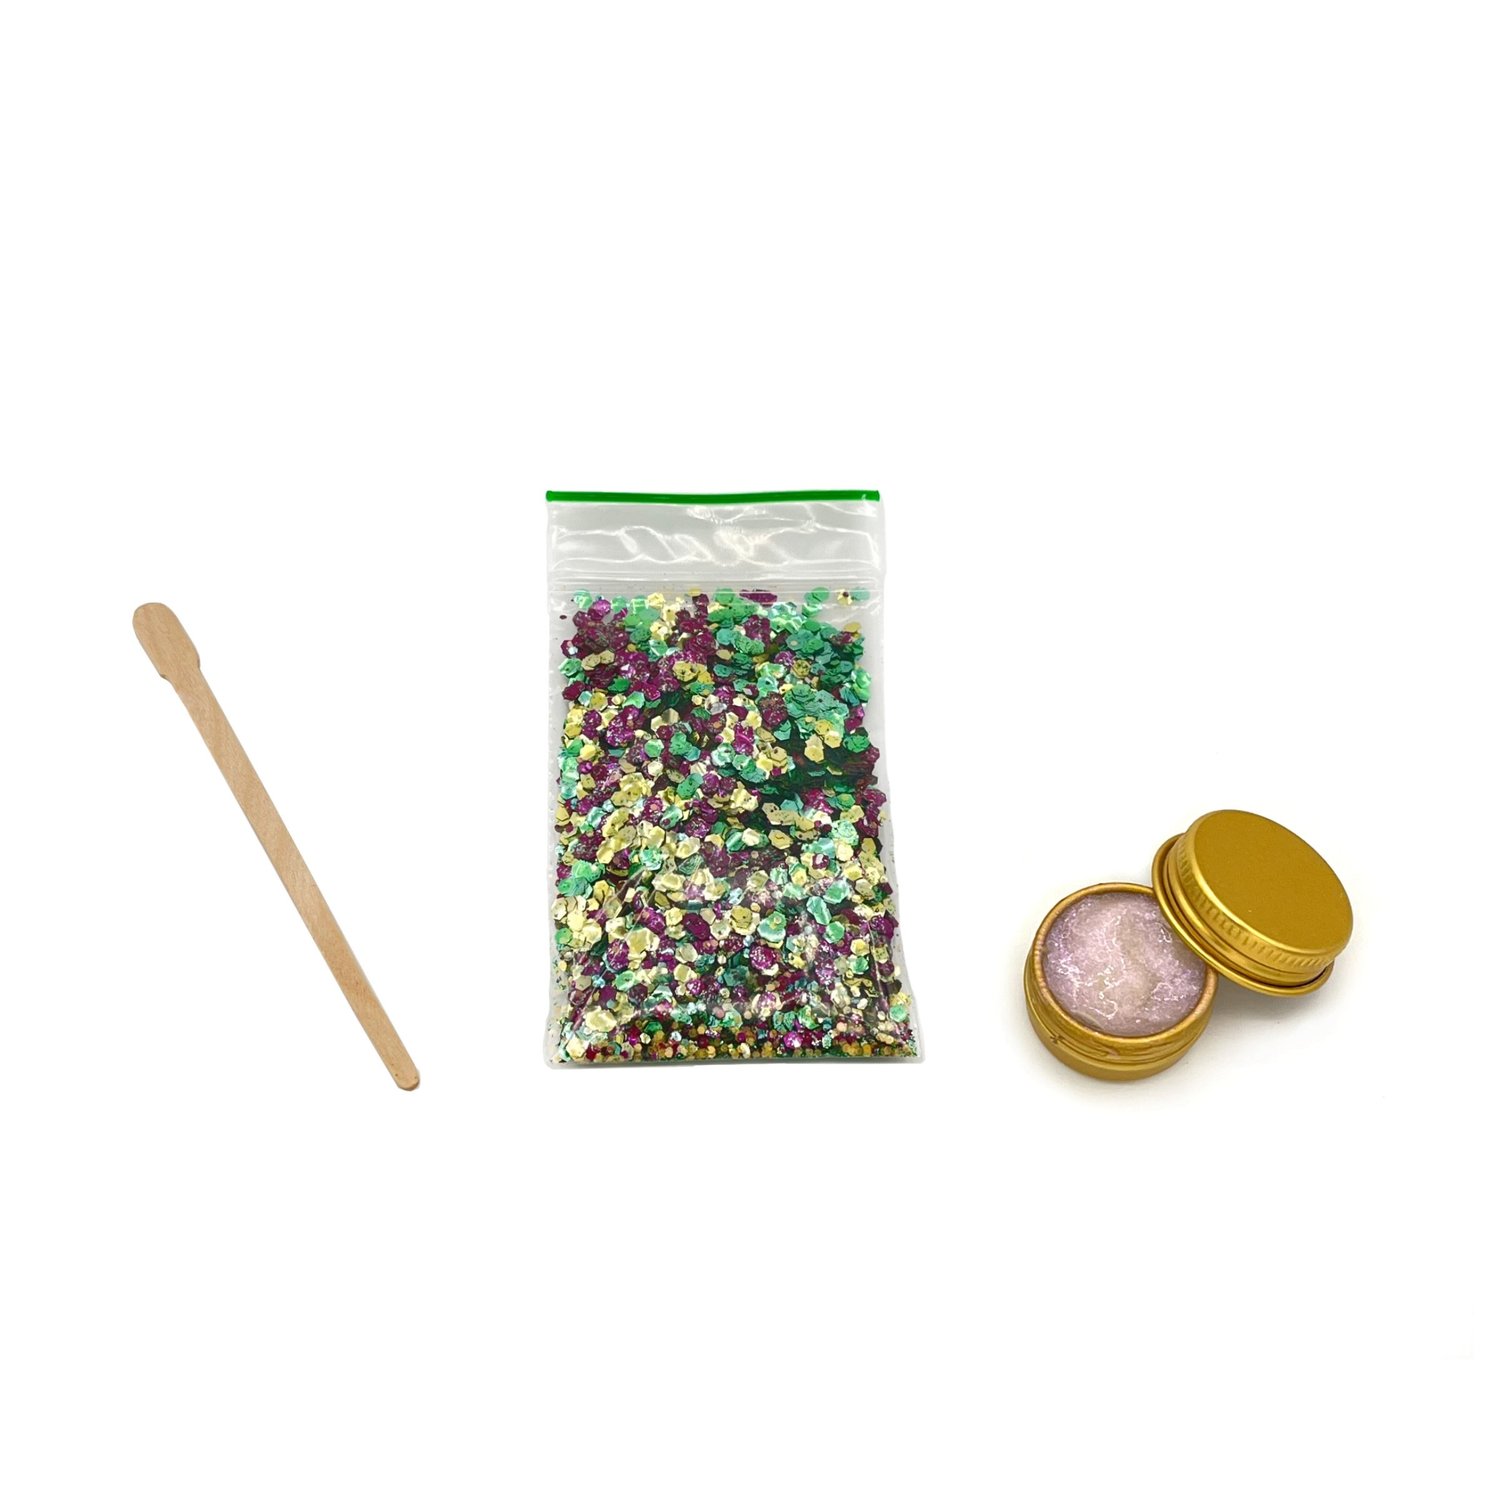 Biodegradable Glitter Kit — Grounds Krewe